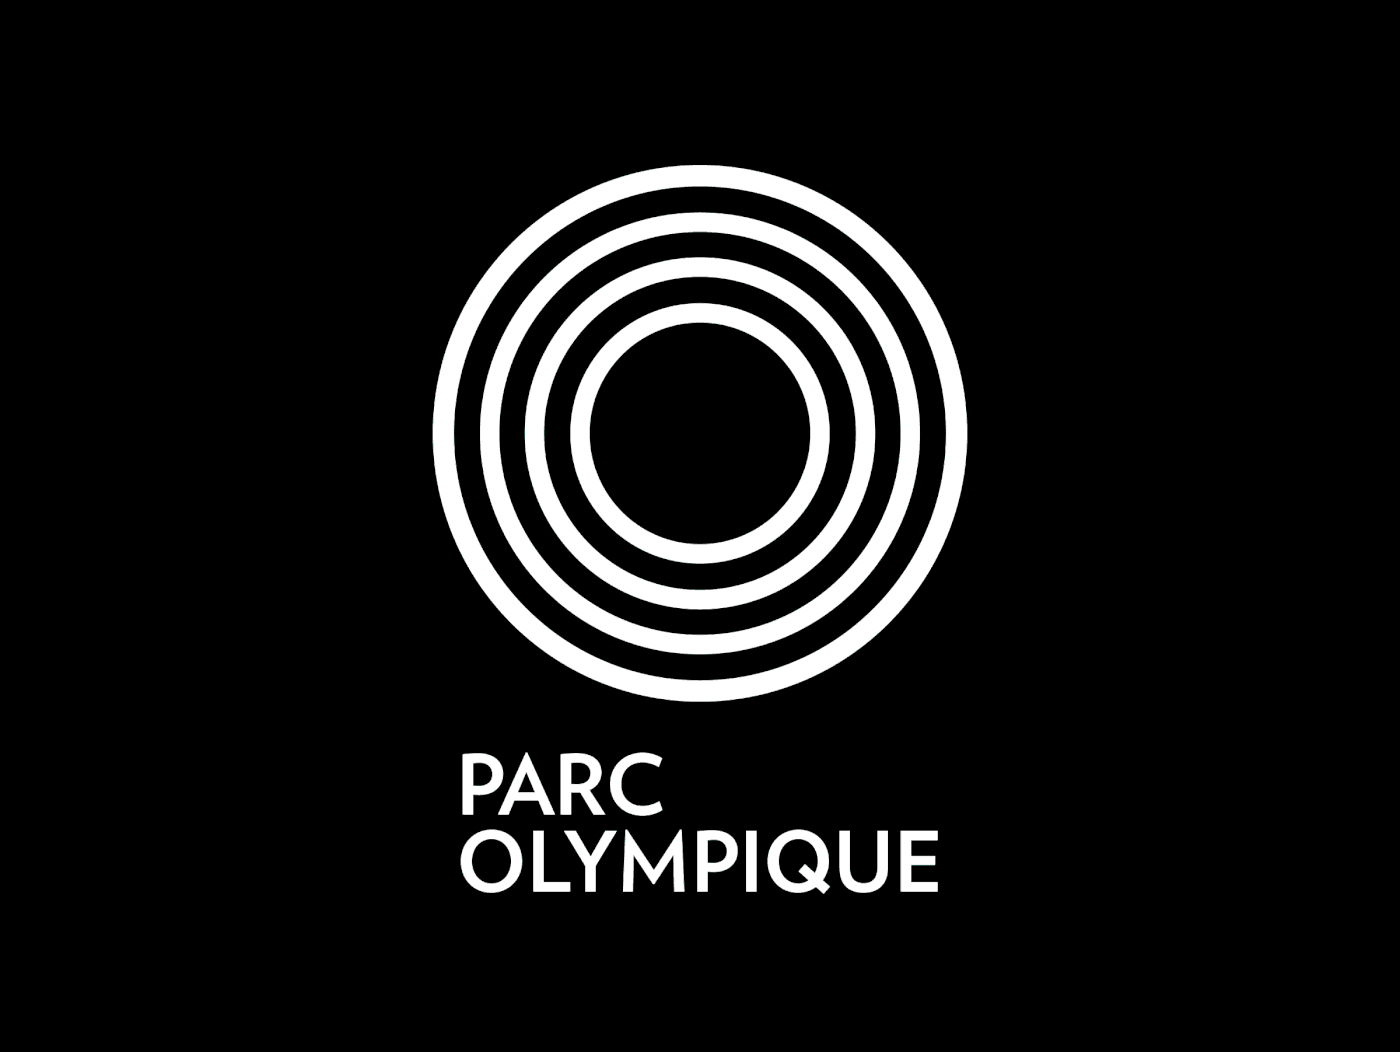 Parc-Olympique-Branding-LG2-AGENCY-01